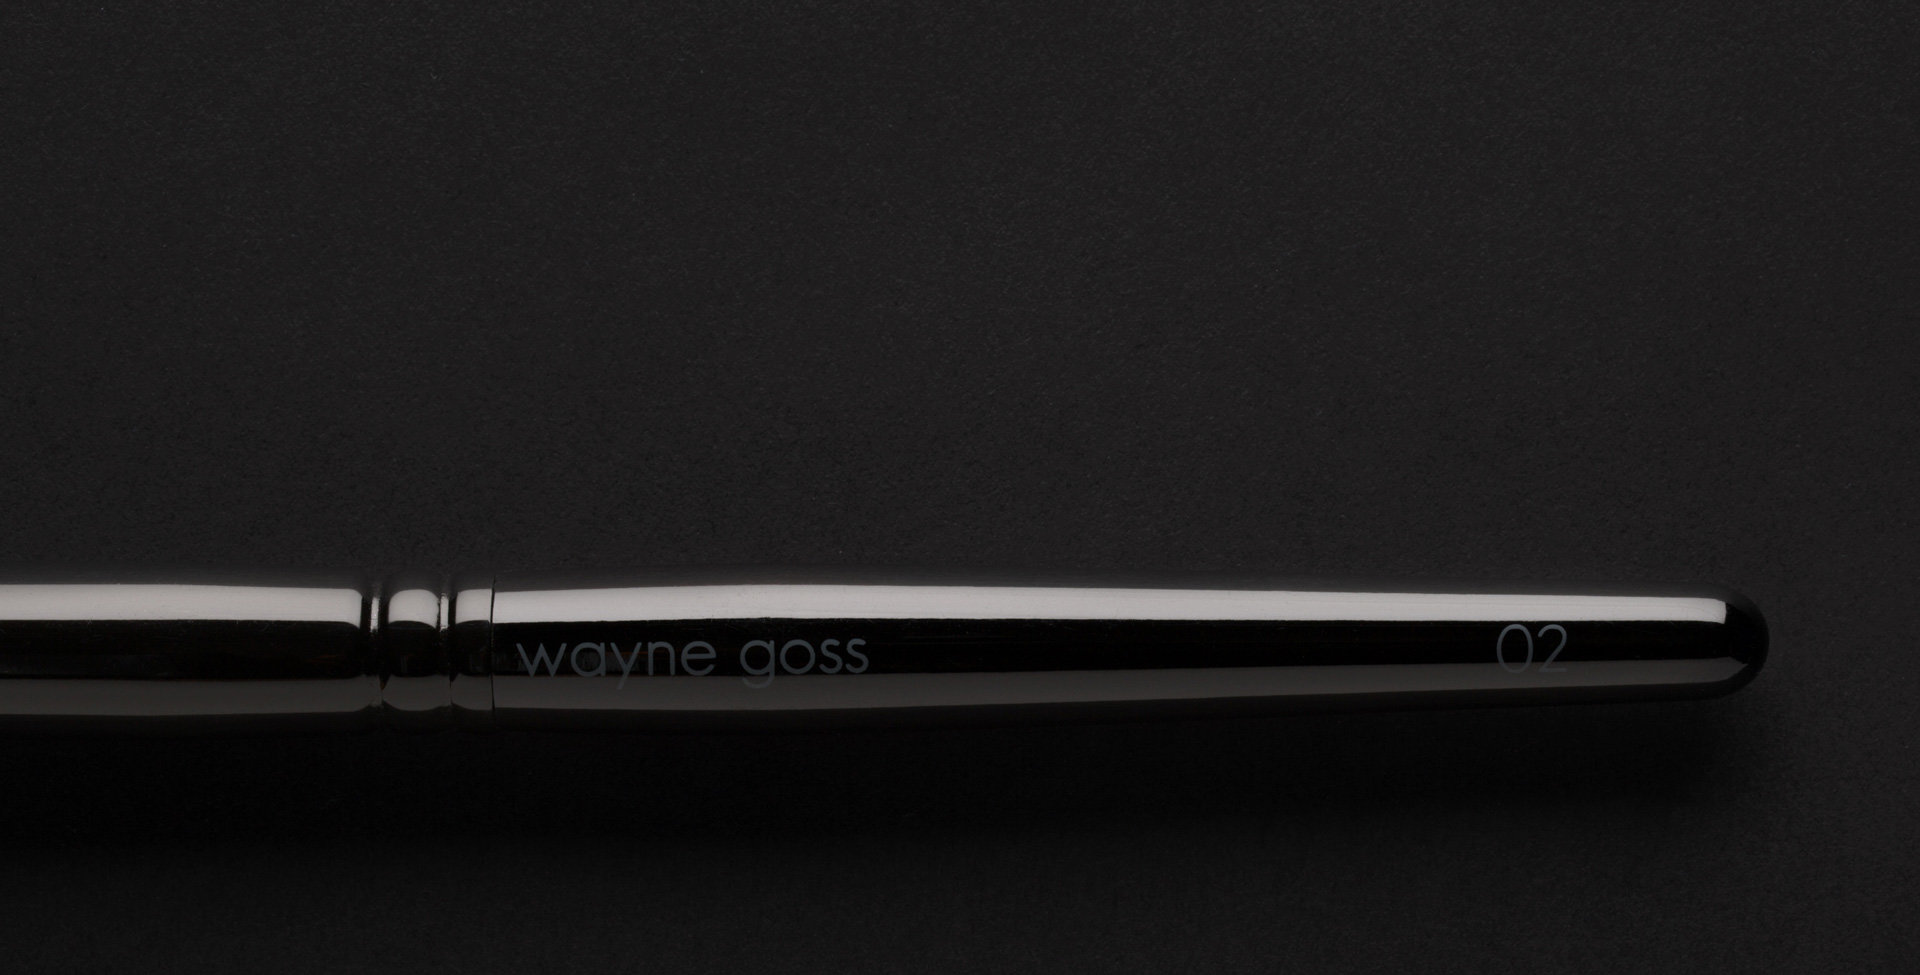 Detail of the brush handles from Wayne Goss.